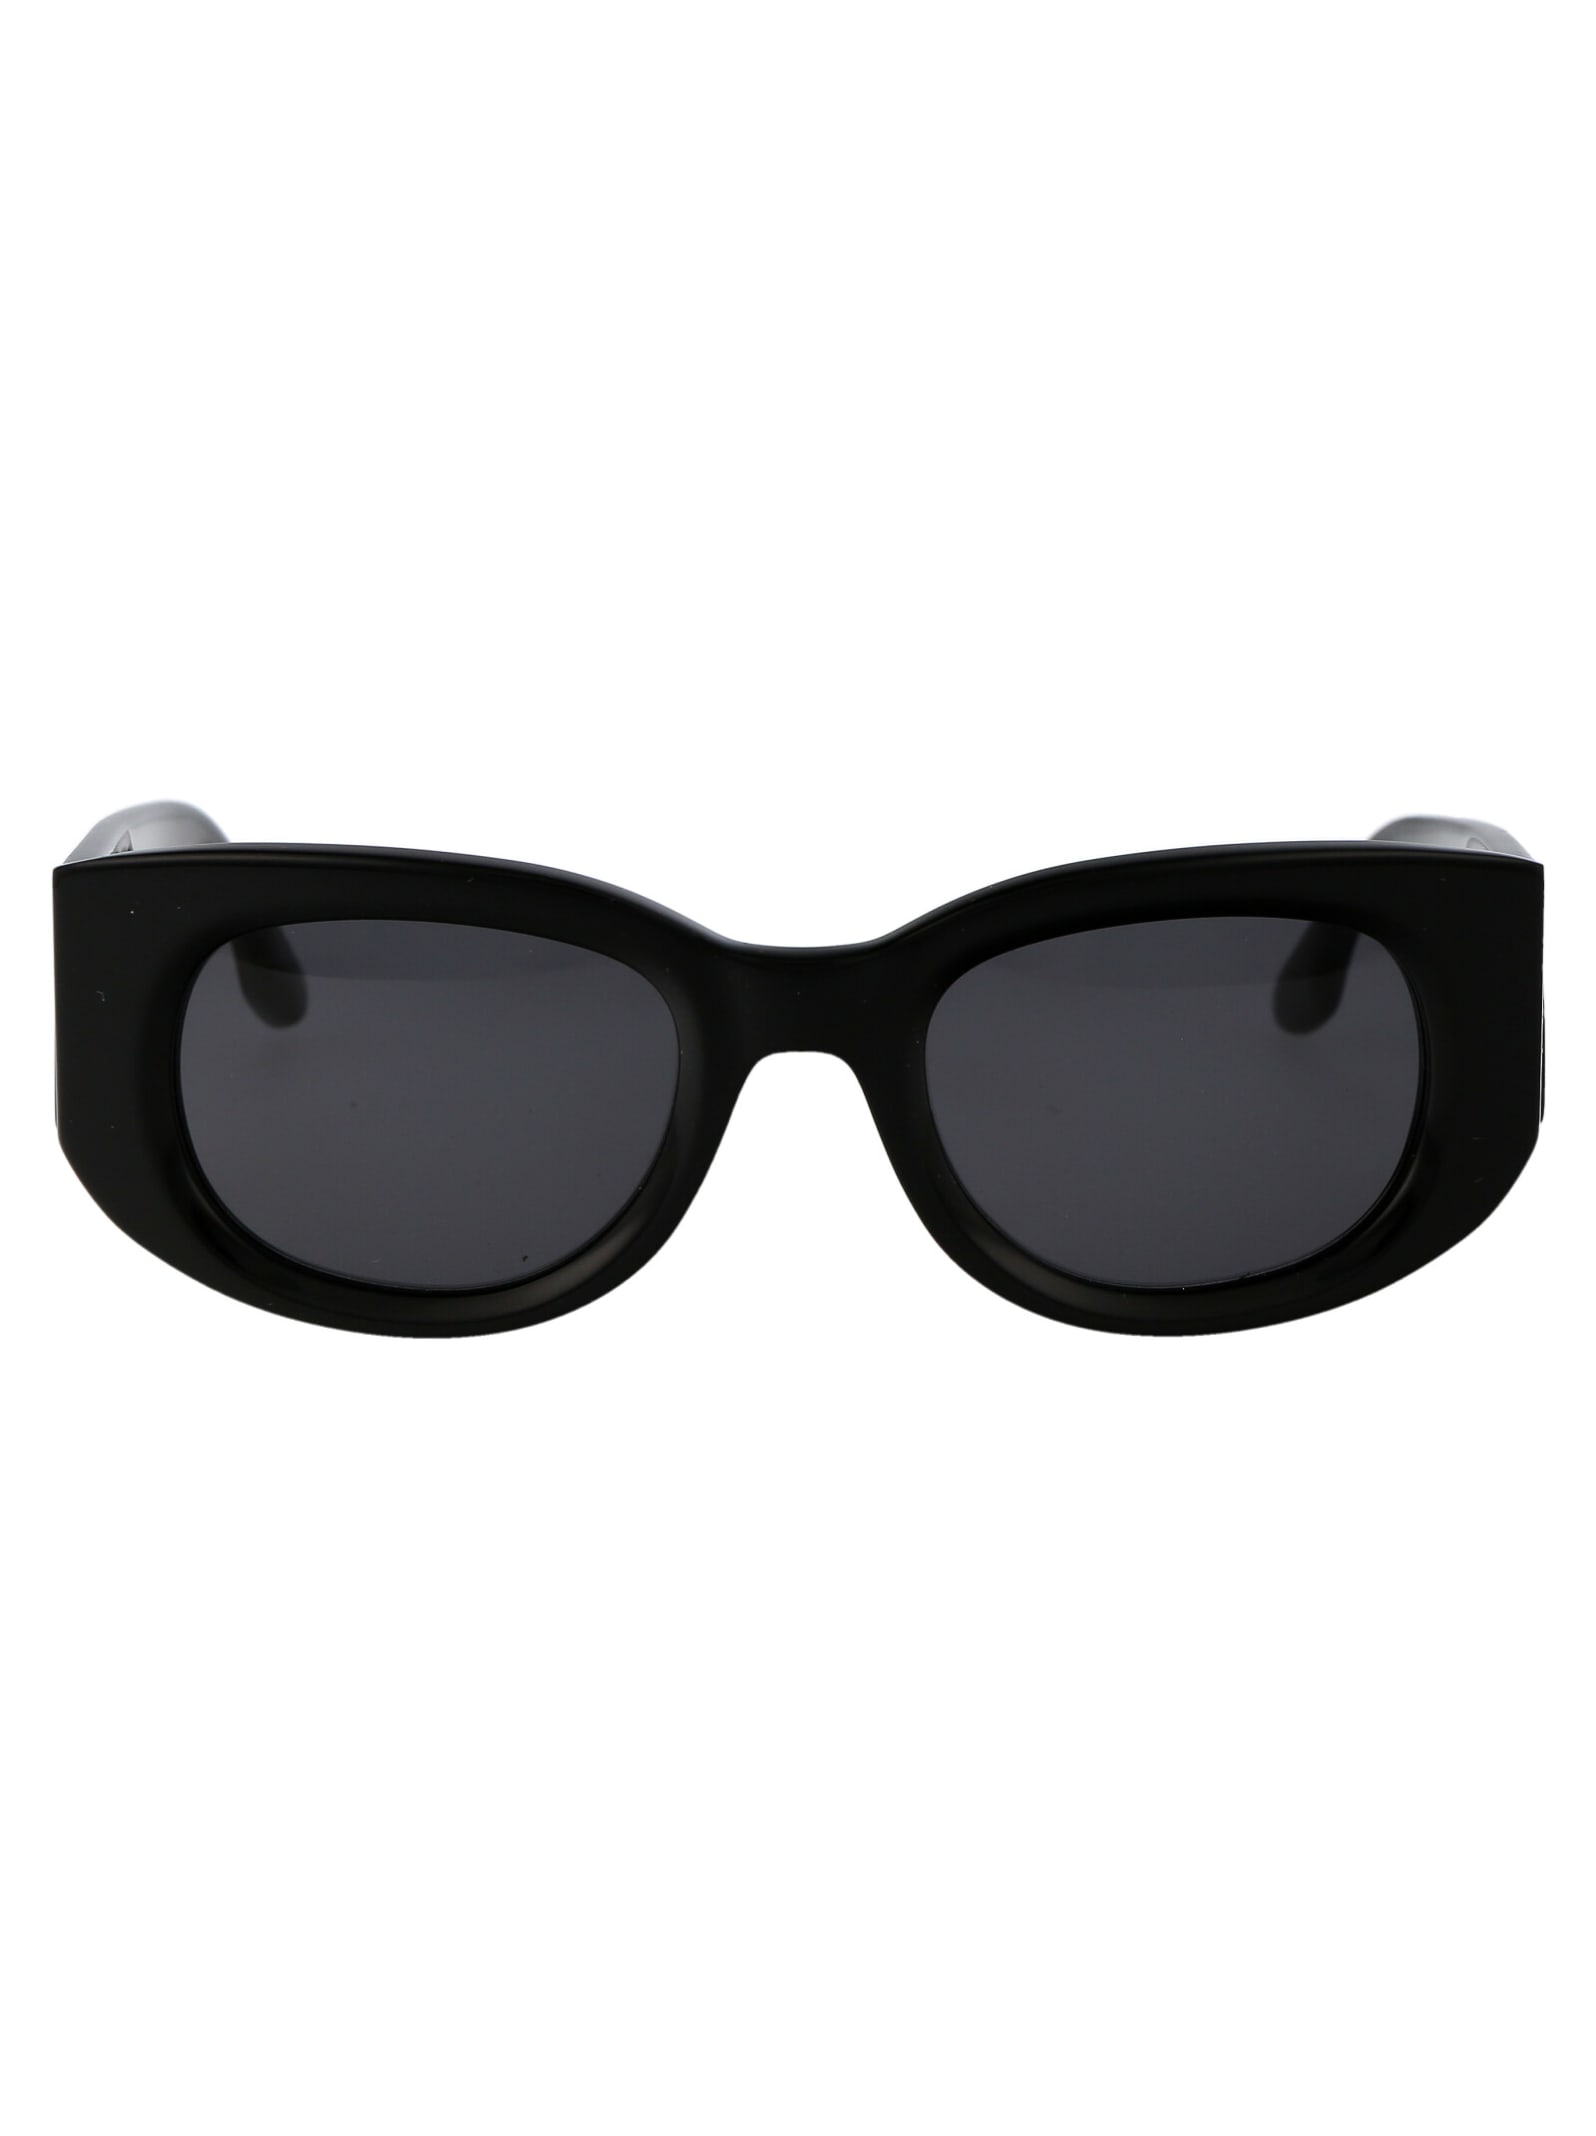 Vb654s Sunglasses